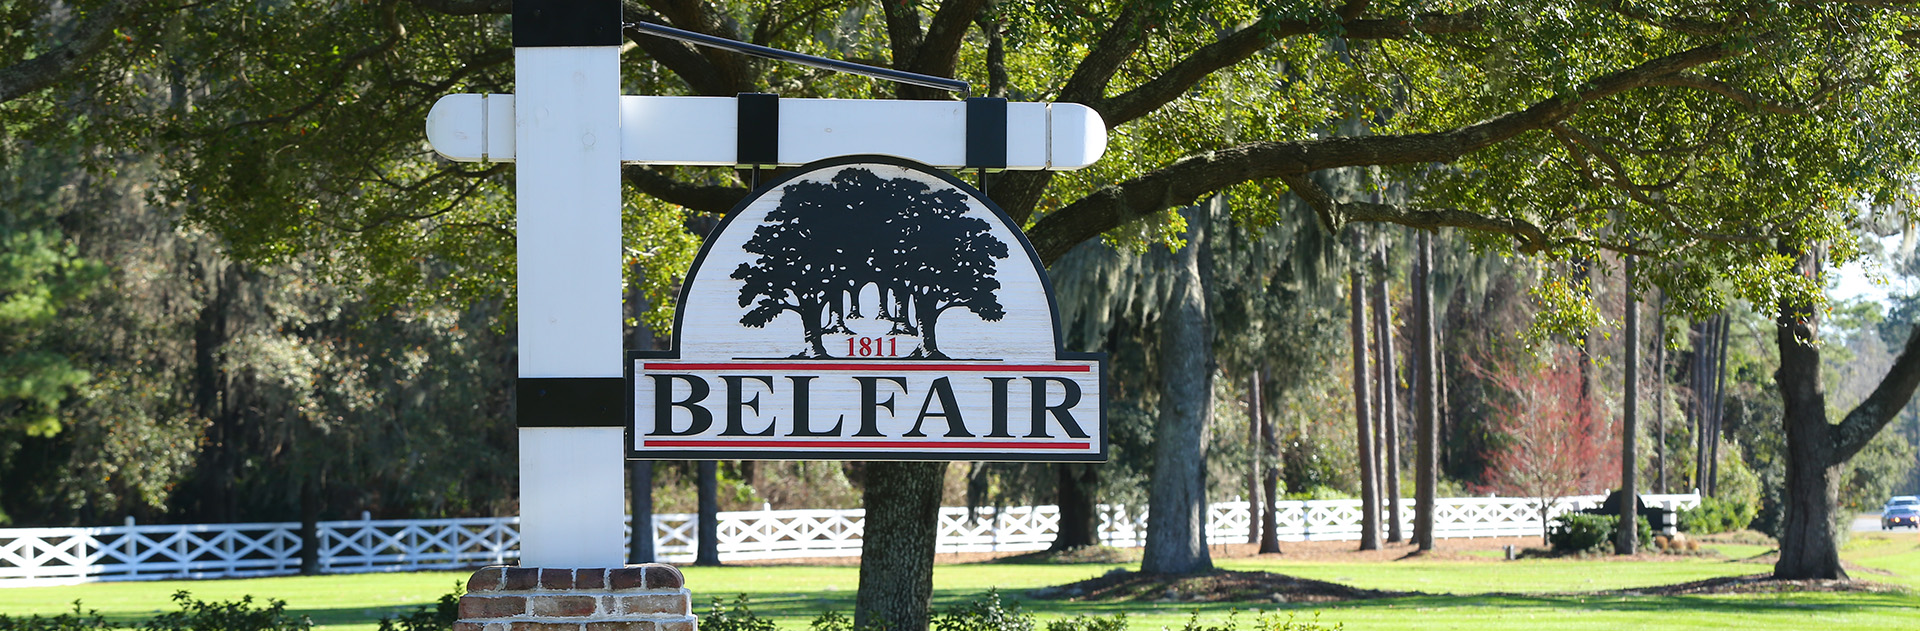 Belfair plantation front sign